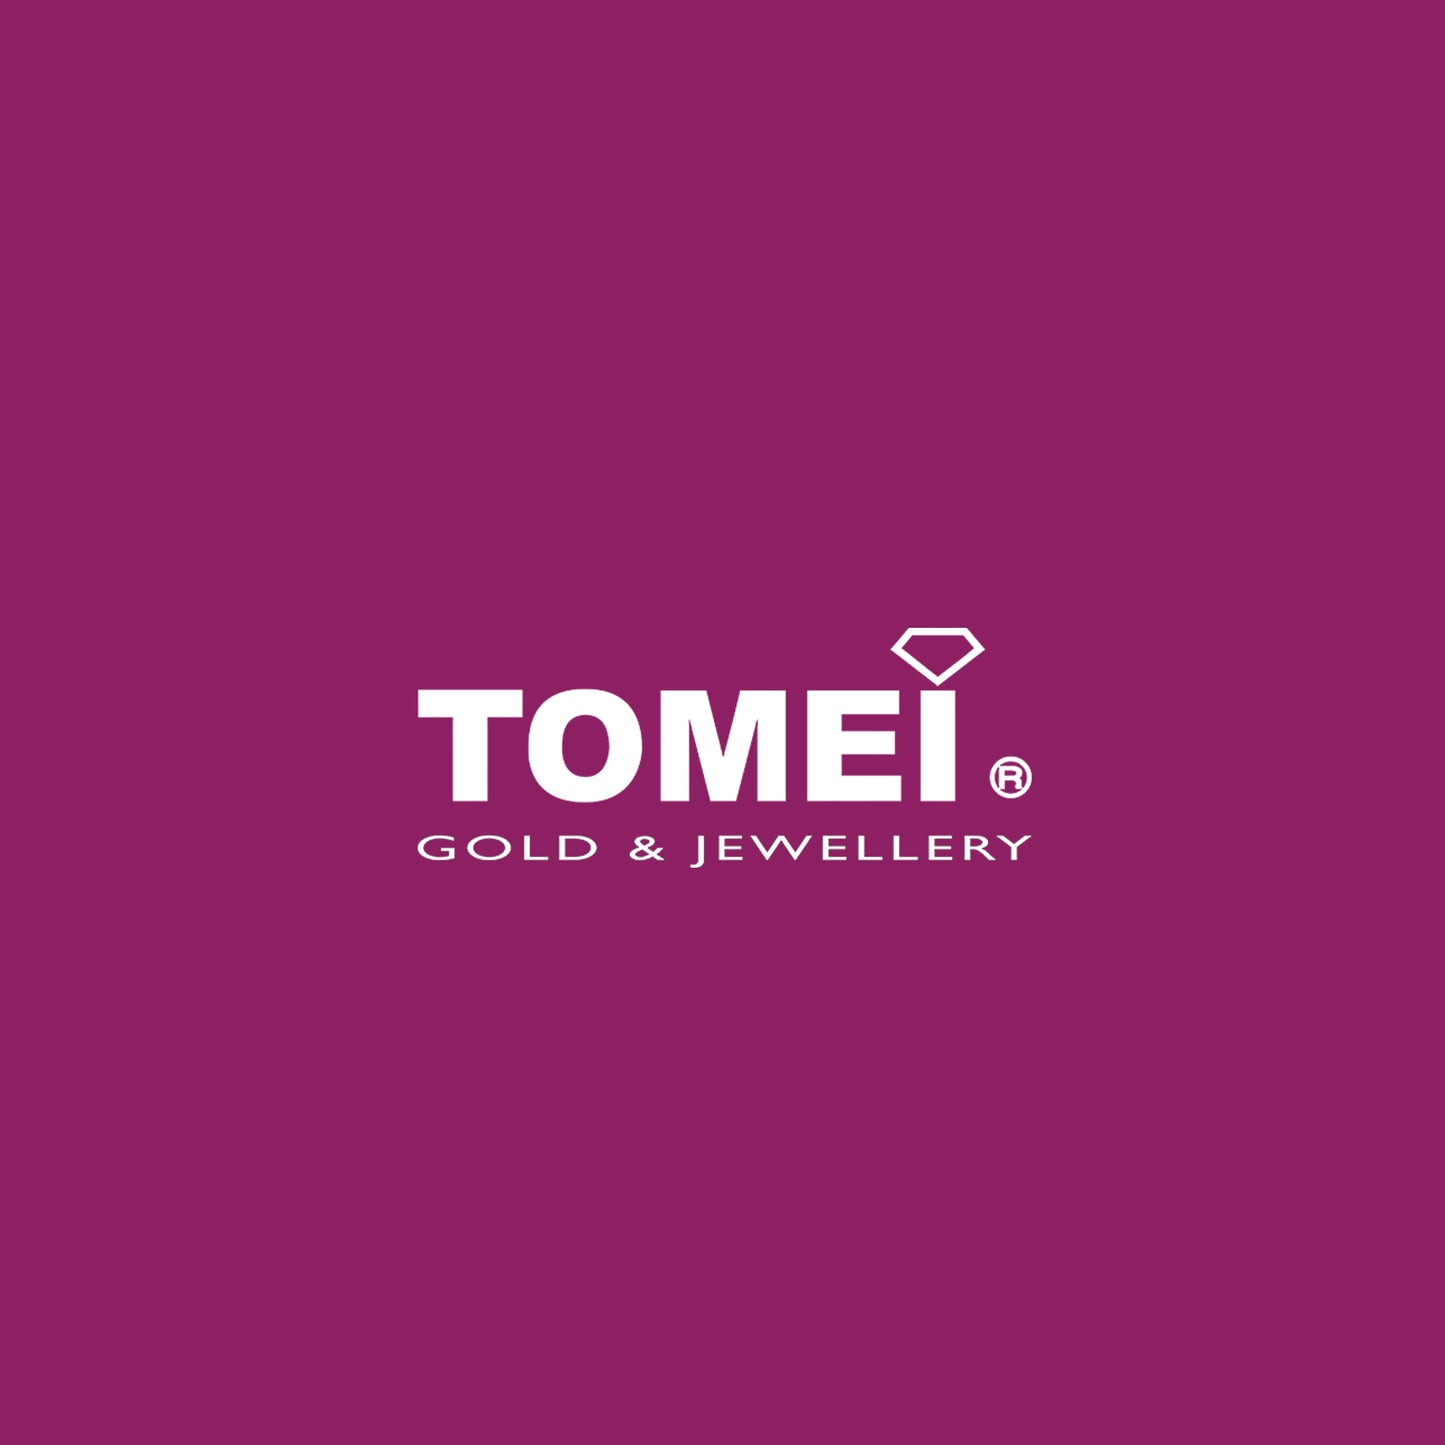 TOMEI Celeste Ring, Sapphire Diamond White Gold 750 (R4110)